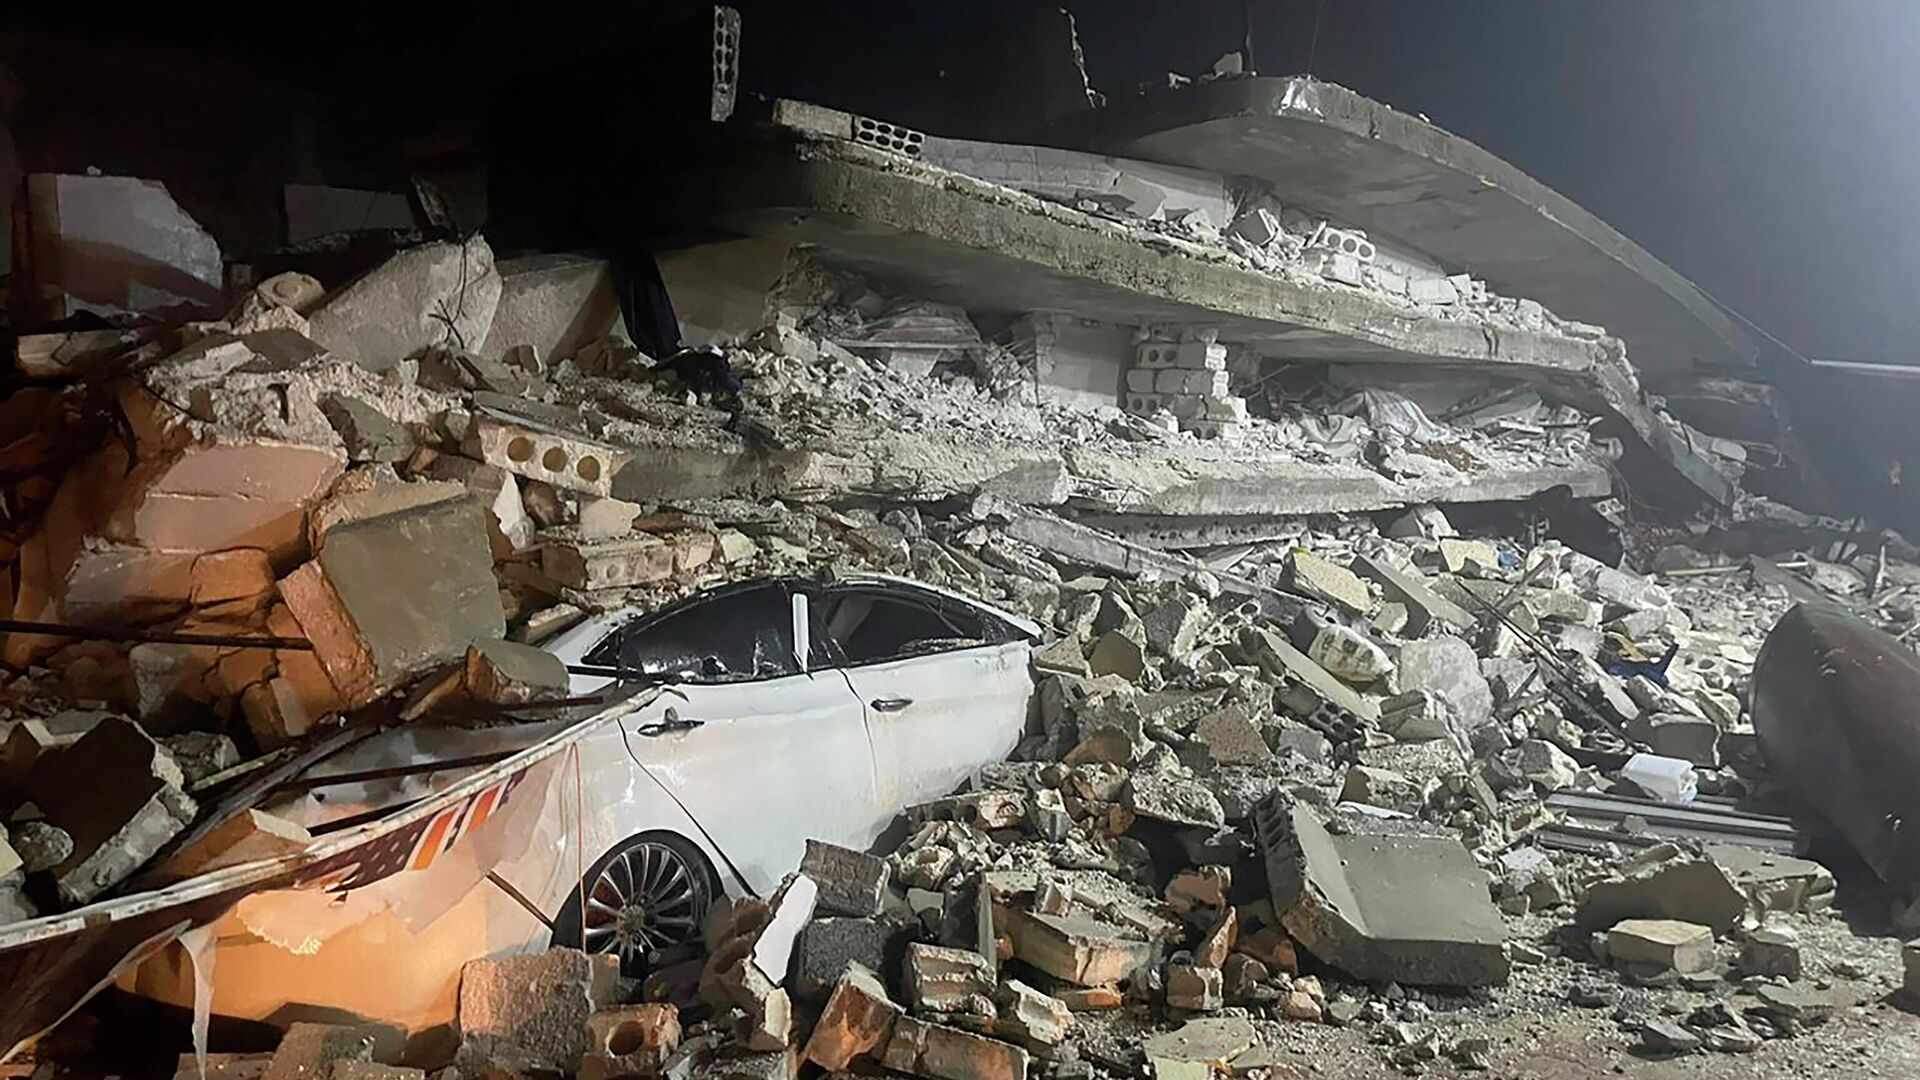 Последствия землетрясения в городе Азмарин, провинция Идлиб, Сирия. 6 февраля 2023 года - ИноСМИ, 1920, 06.02.2023